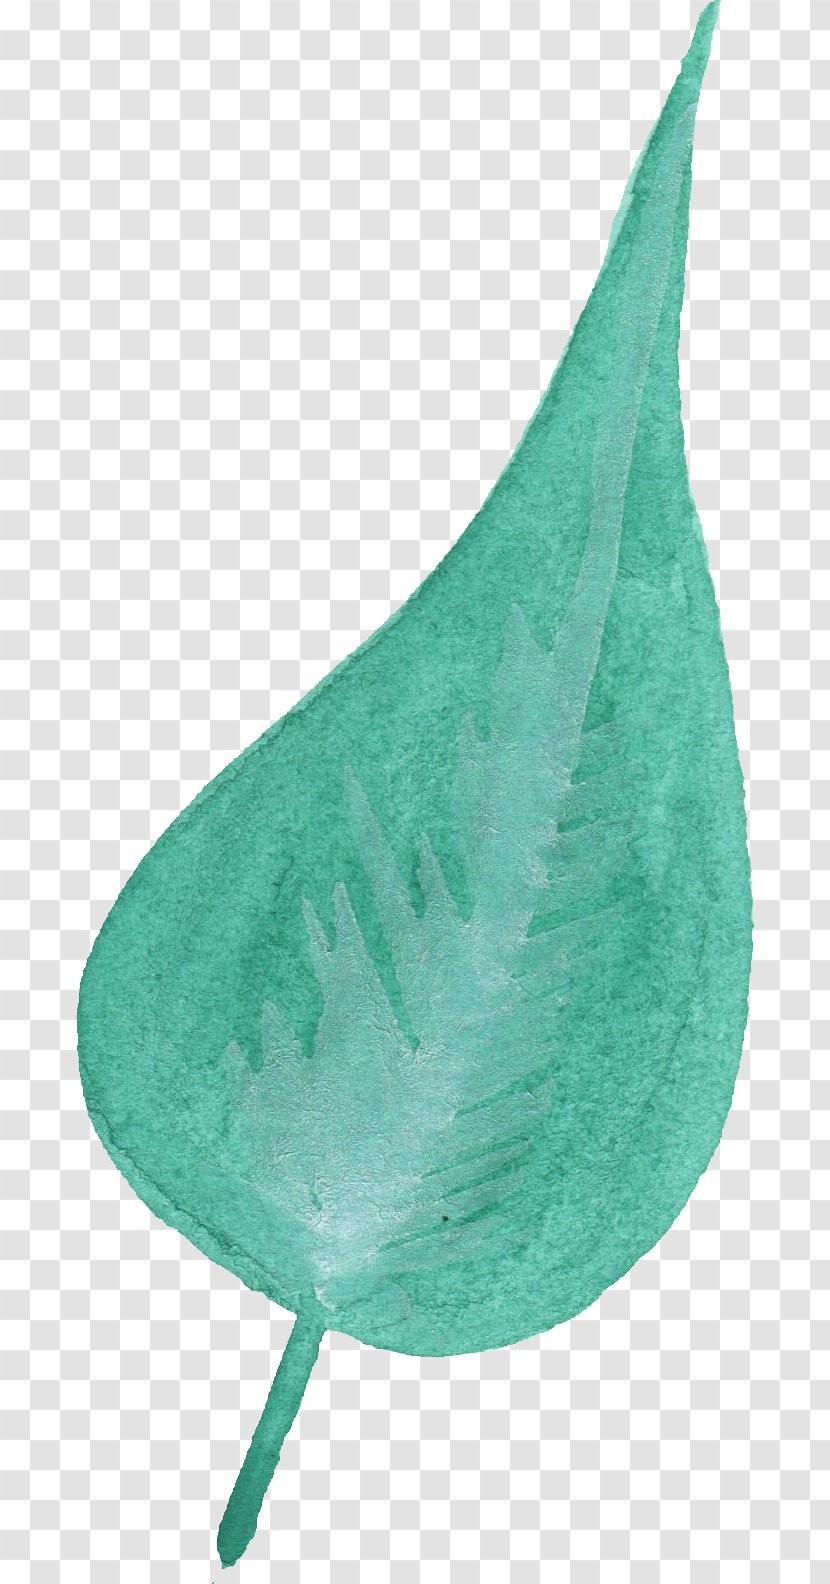 Leaf Teal Turquoise - Aqua - Watercolor Leaves Transparent PNG